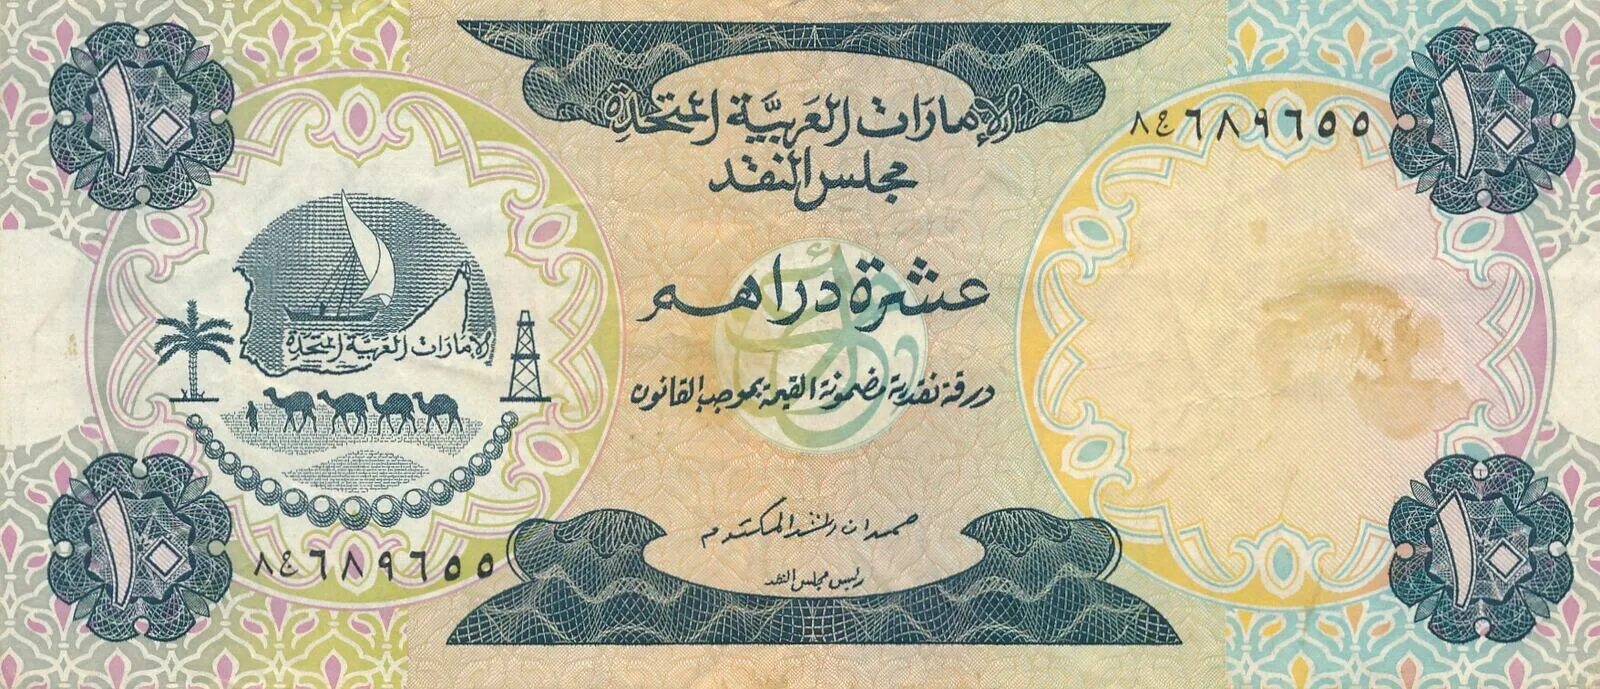 Номинал дирхам. 500 Дирхам ОАЭ банкнота. 10 Дирхамов ОАЭ. Банкнота 100 дирхам ОАЭ. Купюры арабский эмират 10 дирхам.